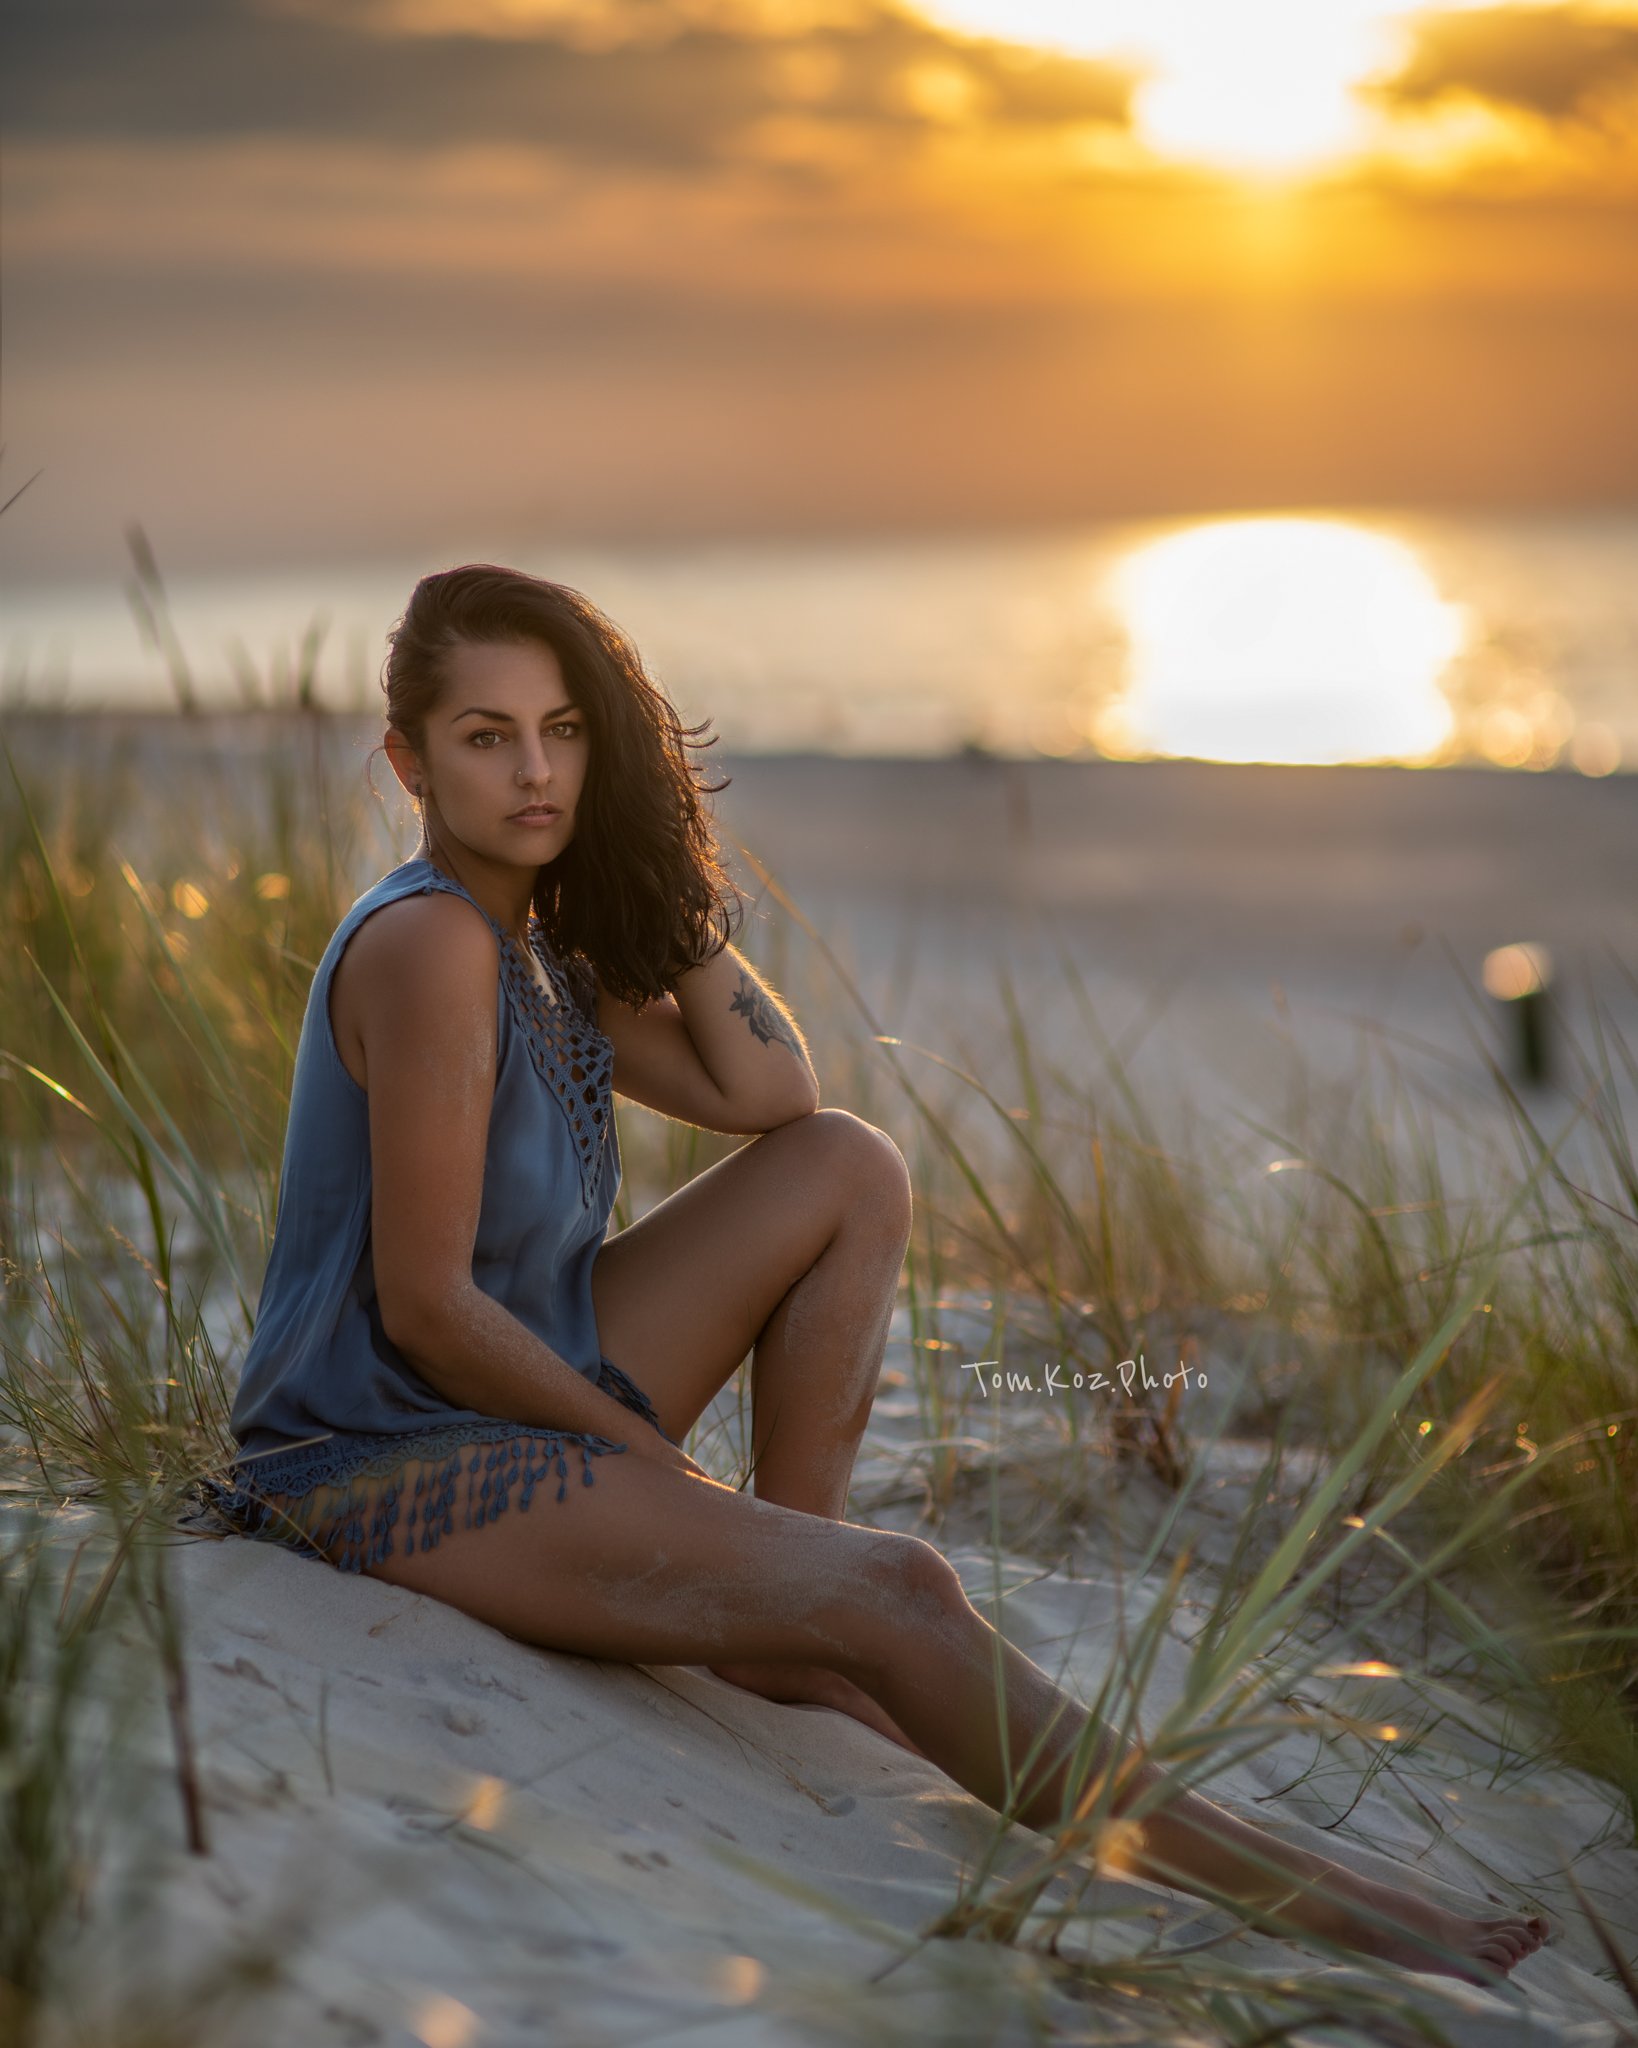 d850, nikon, beach, girl, 85mm, sunset, baltic, poland,  @tom.koz.photo